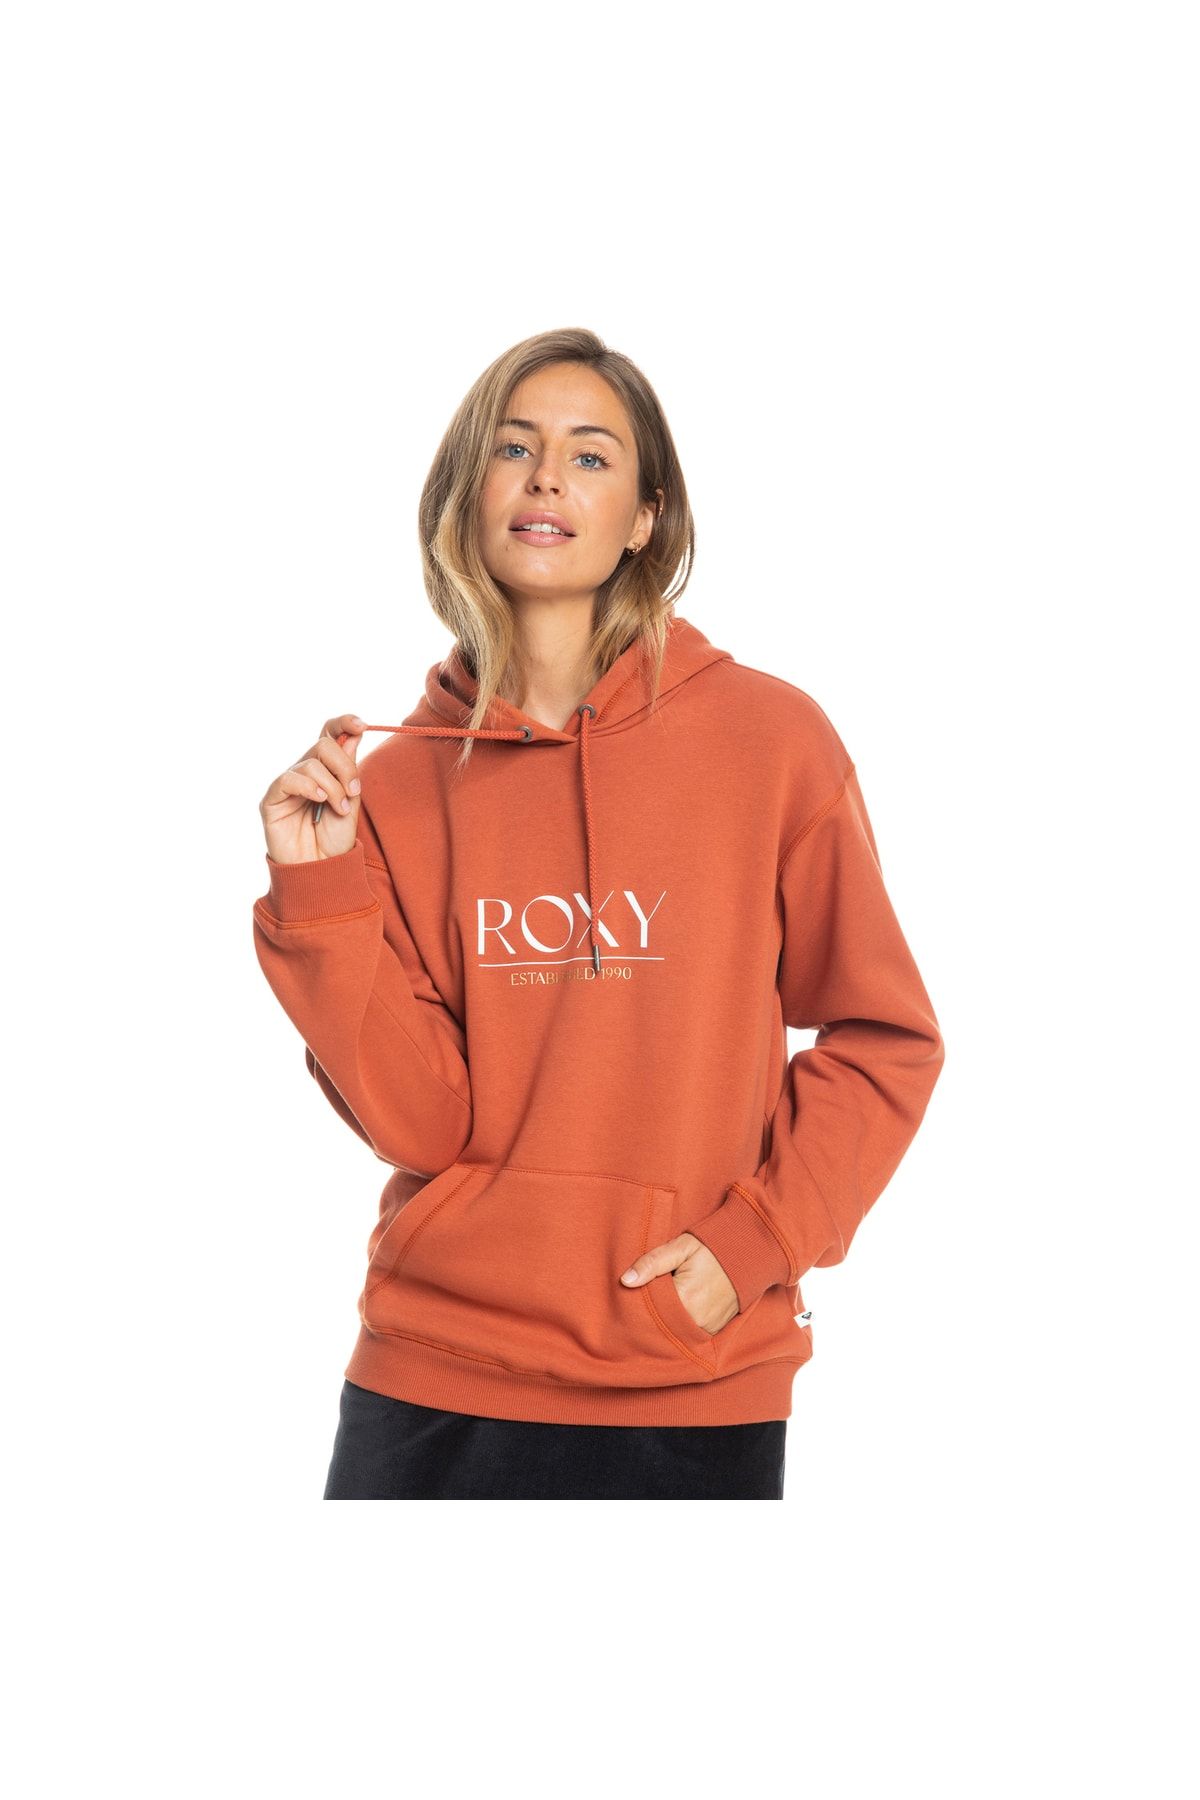 Roxy Surf Stoked Brushed Kadın Sweatshirt